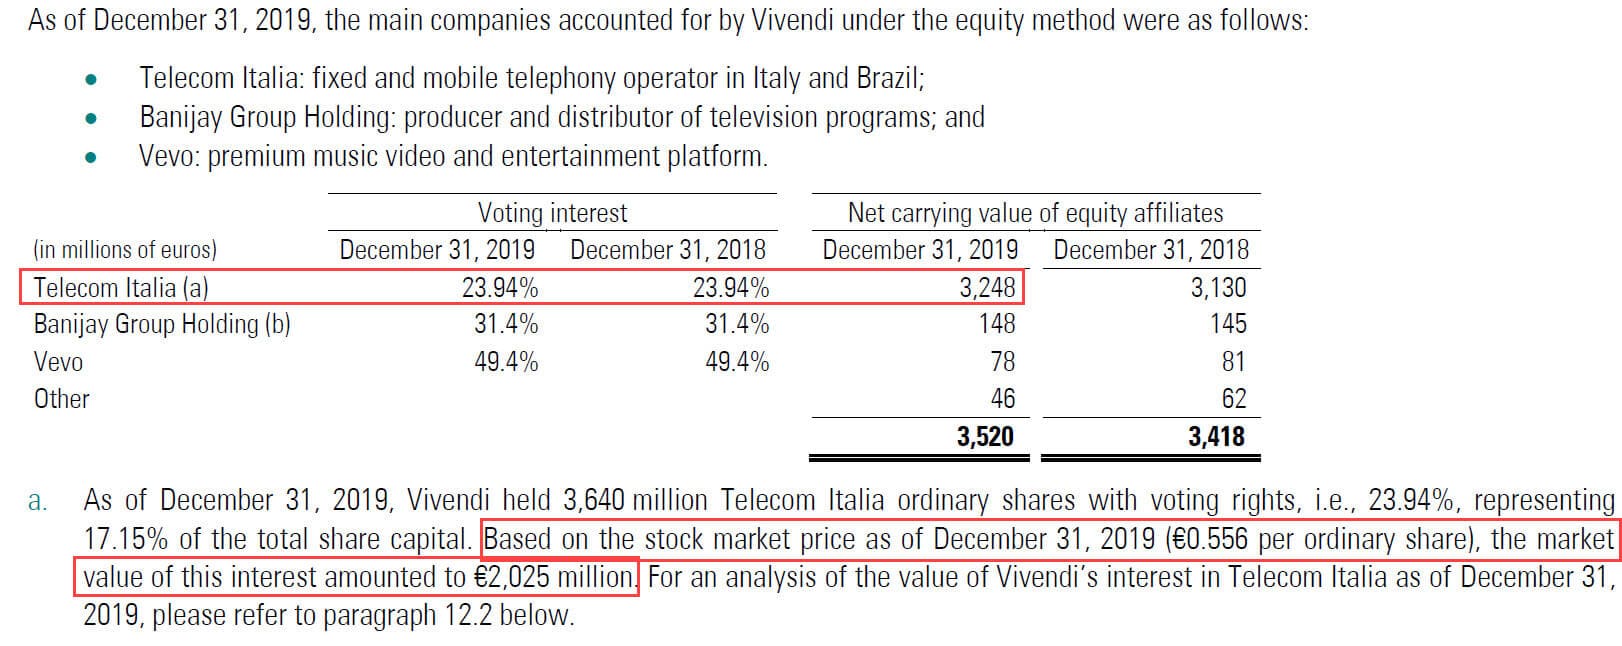 Vivendi - Equity Investment Market Values